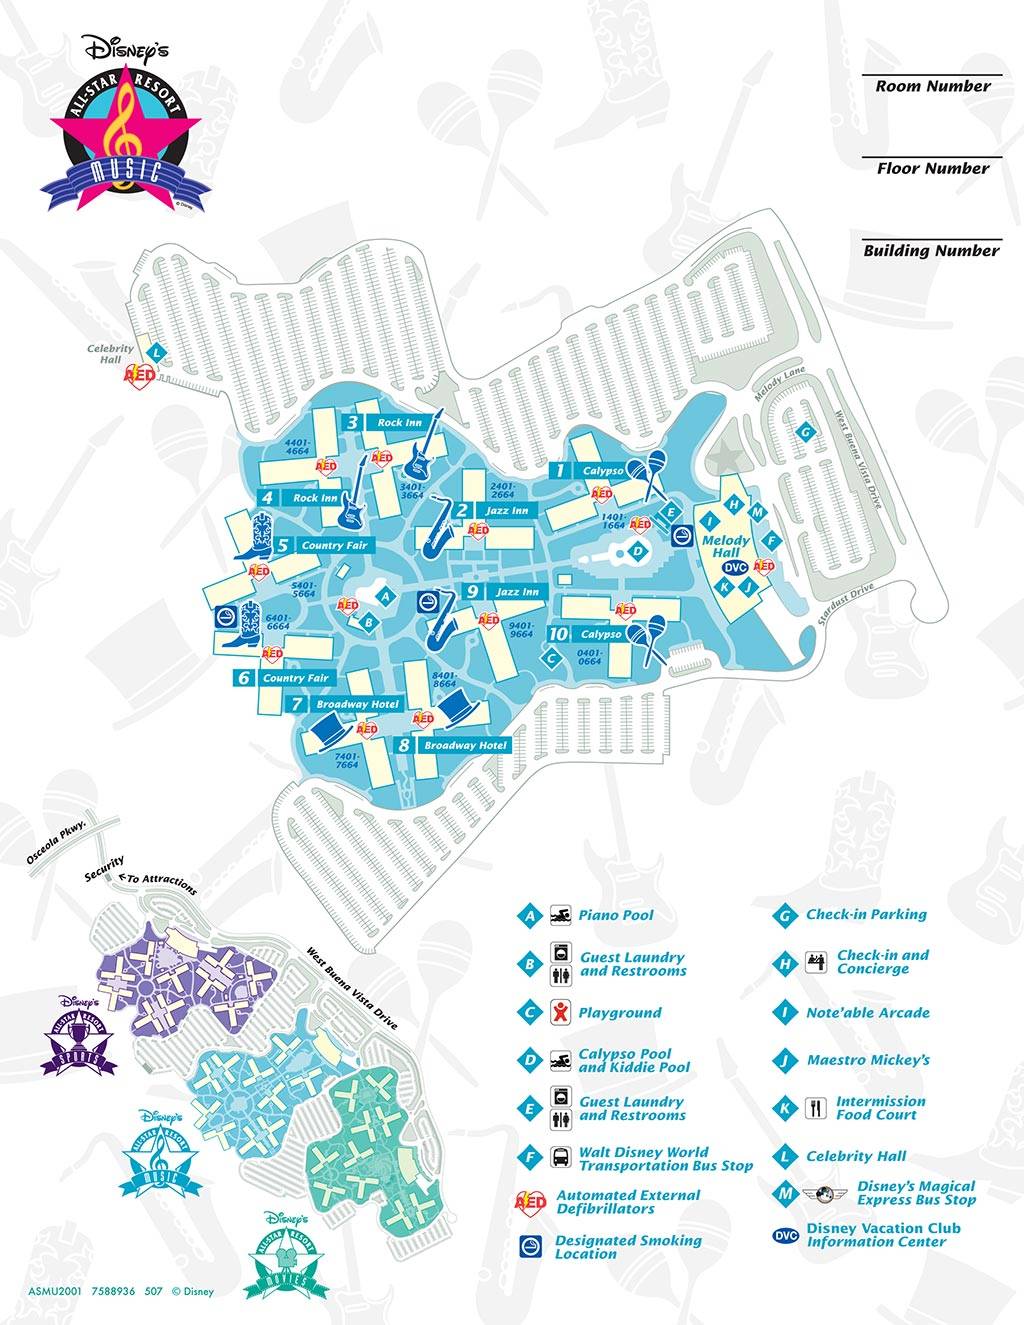 Disney's All-Star Music Resort map